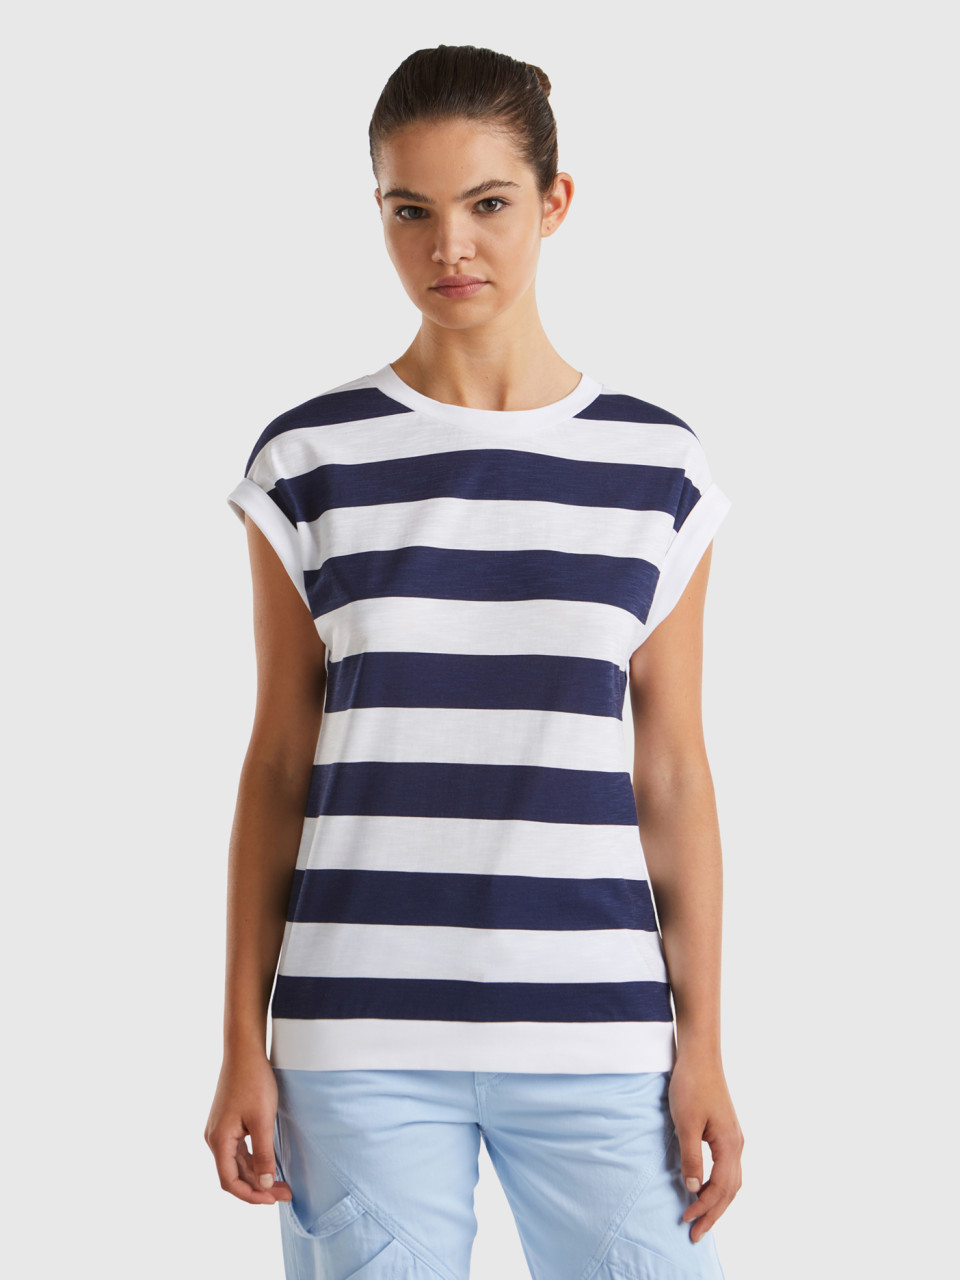 Benetton, Striped T-shirt In 100% Cotton, Multi-color, Women